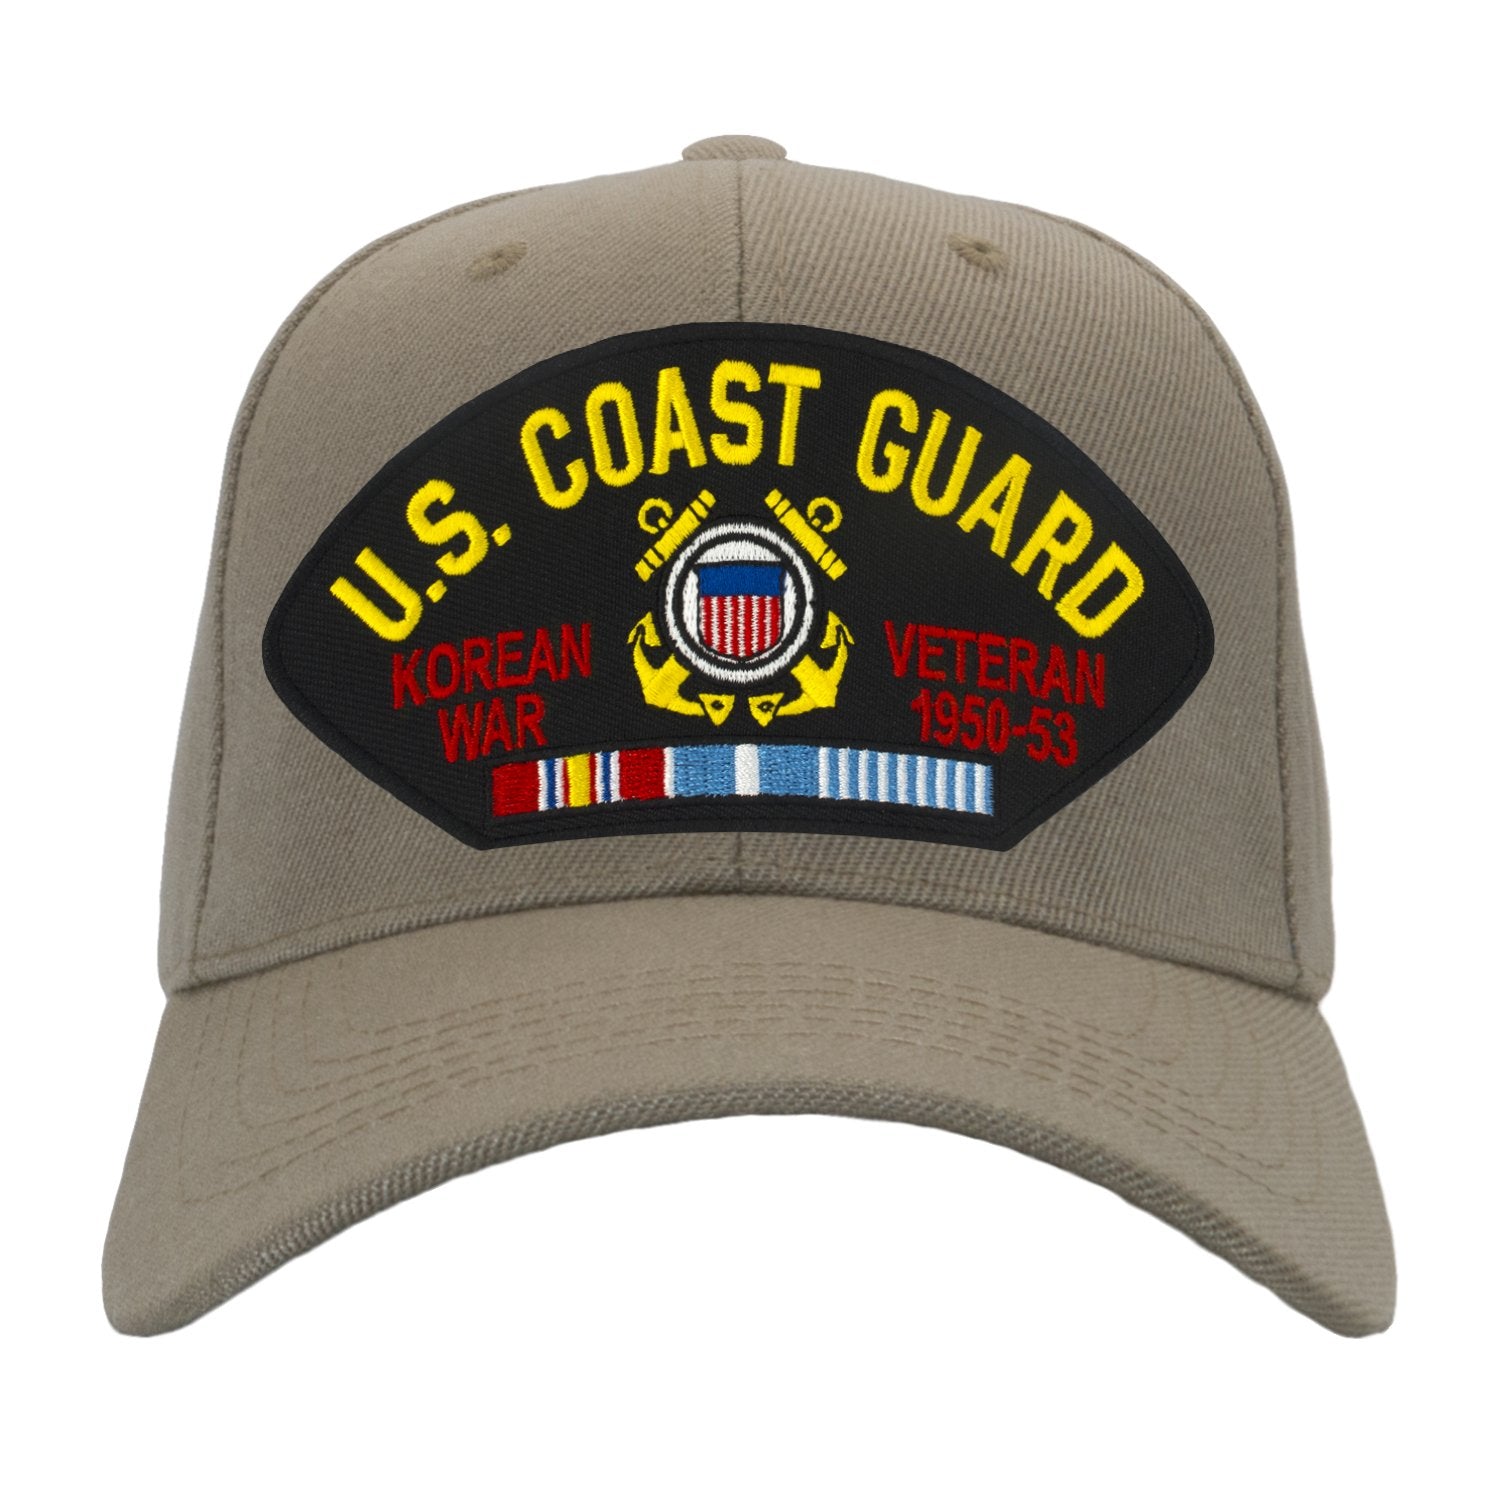 US Coast Guard - Korean War Veteran Hat - Multiple Colors Available